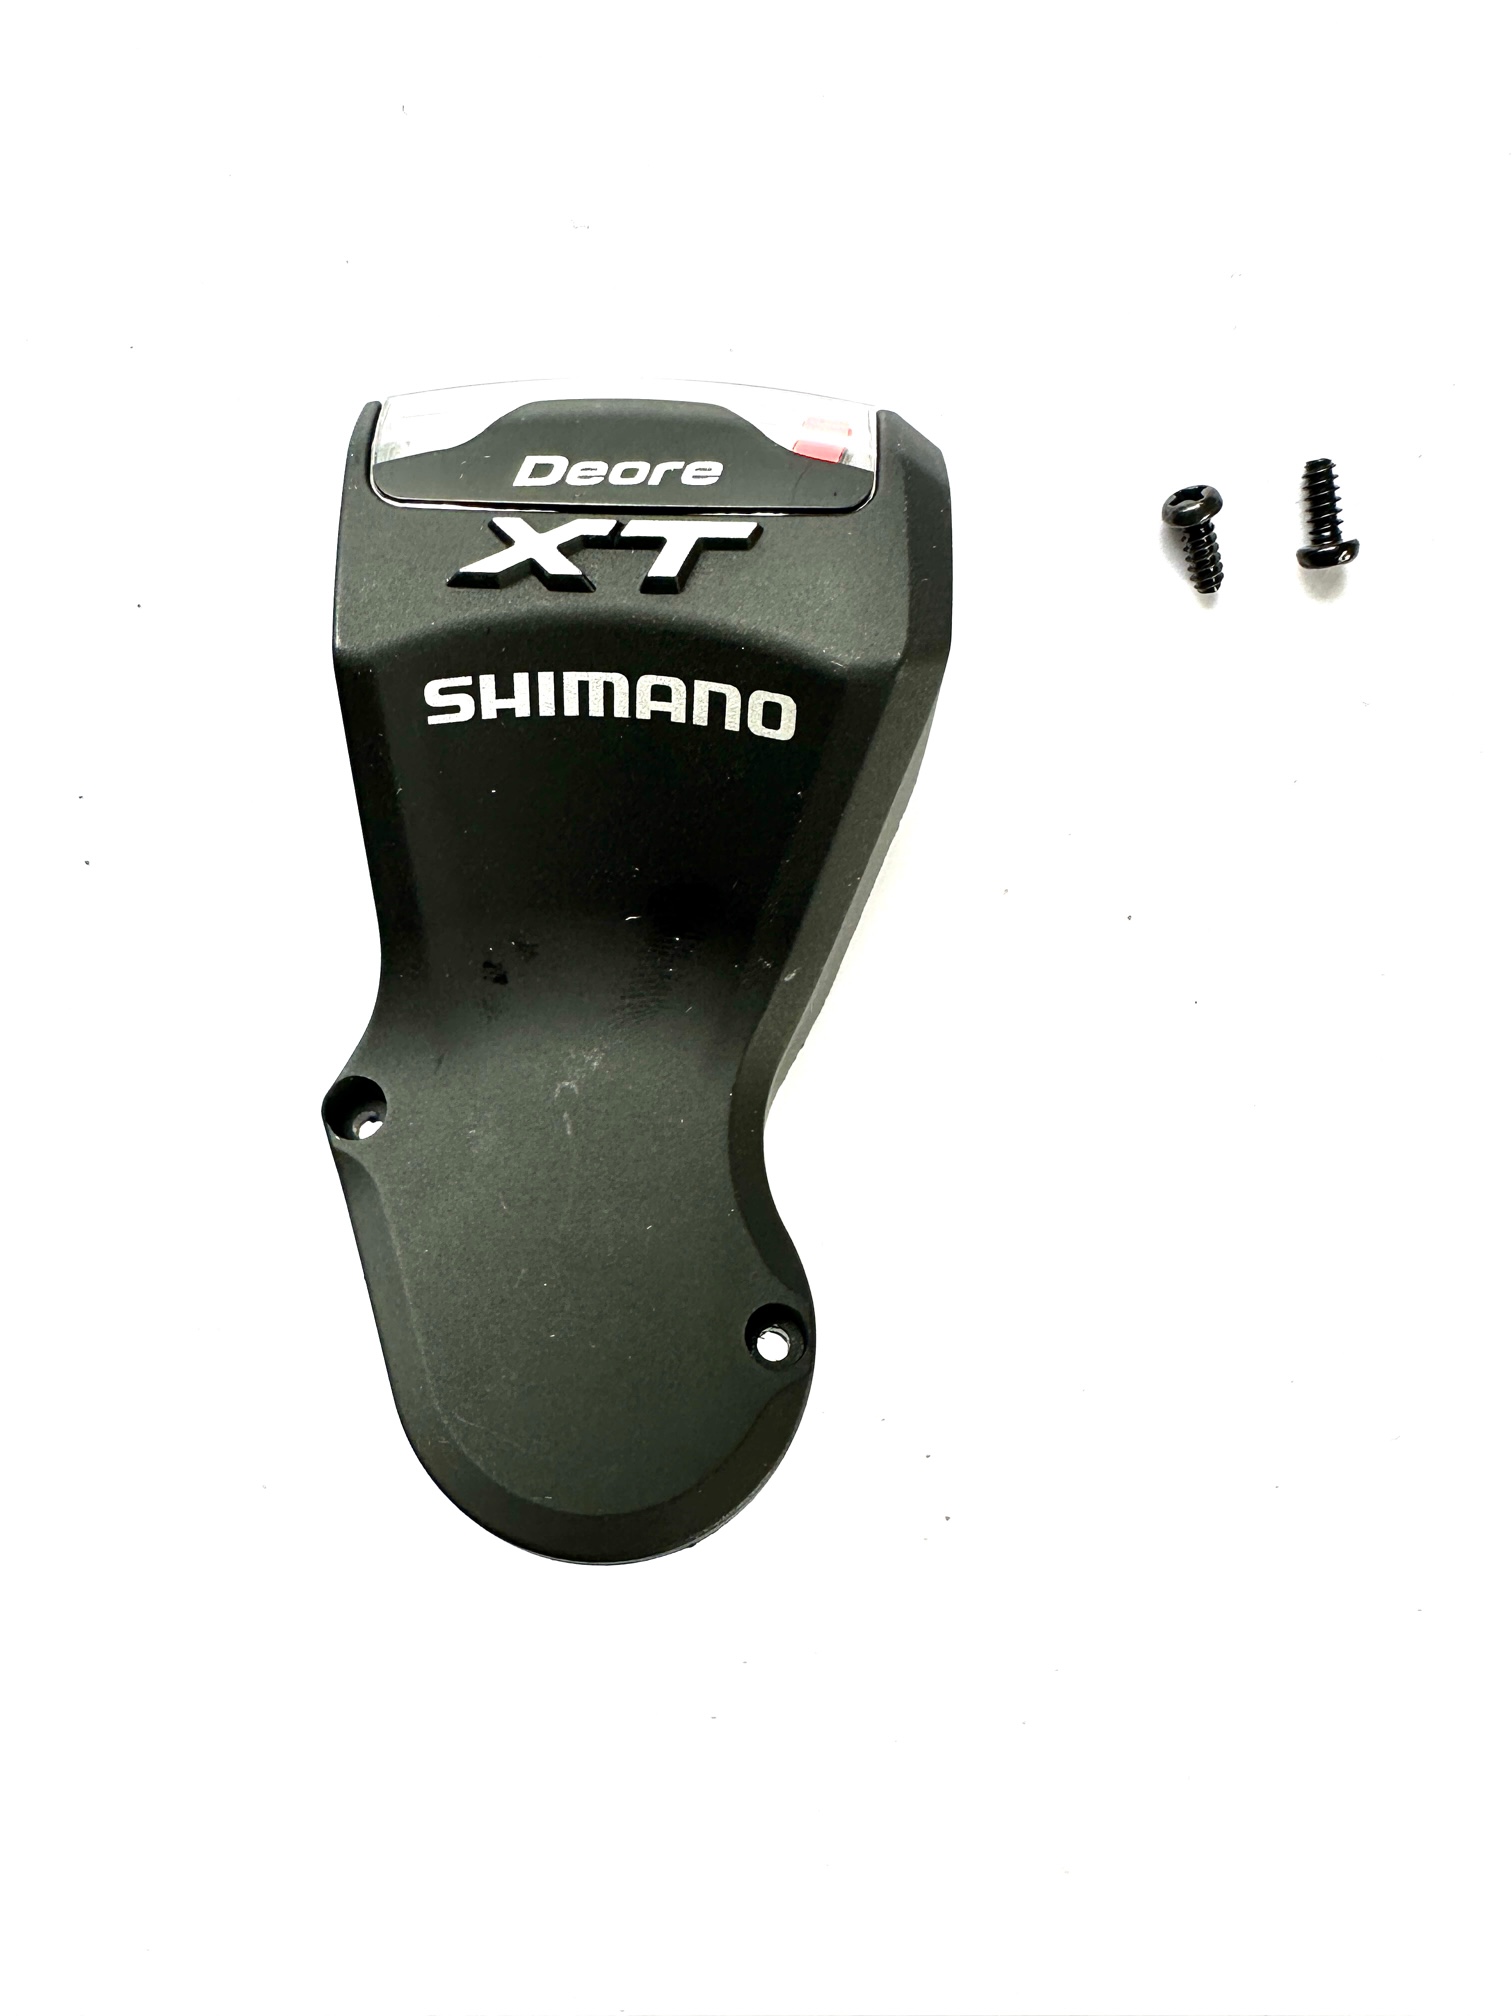 SHIMANO Deore XT gear indicator right SL-M770